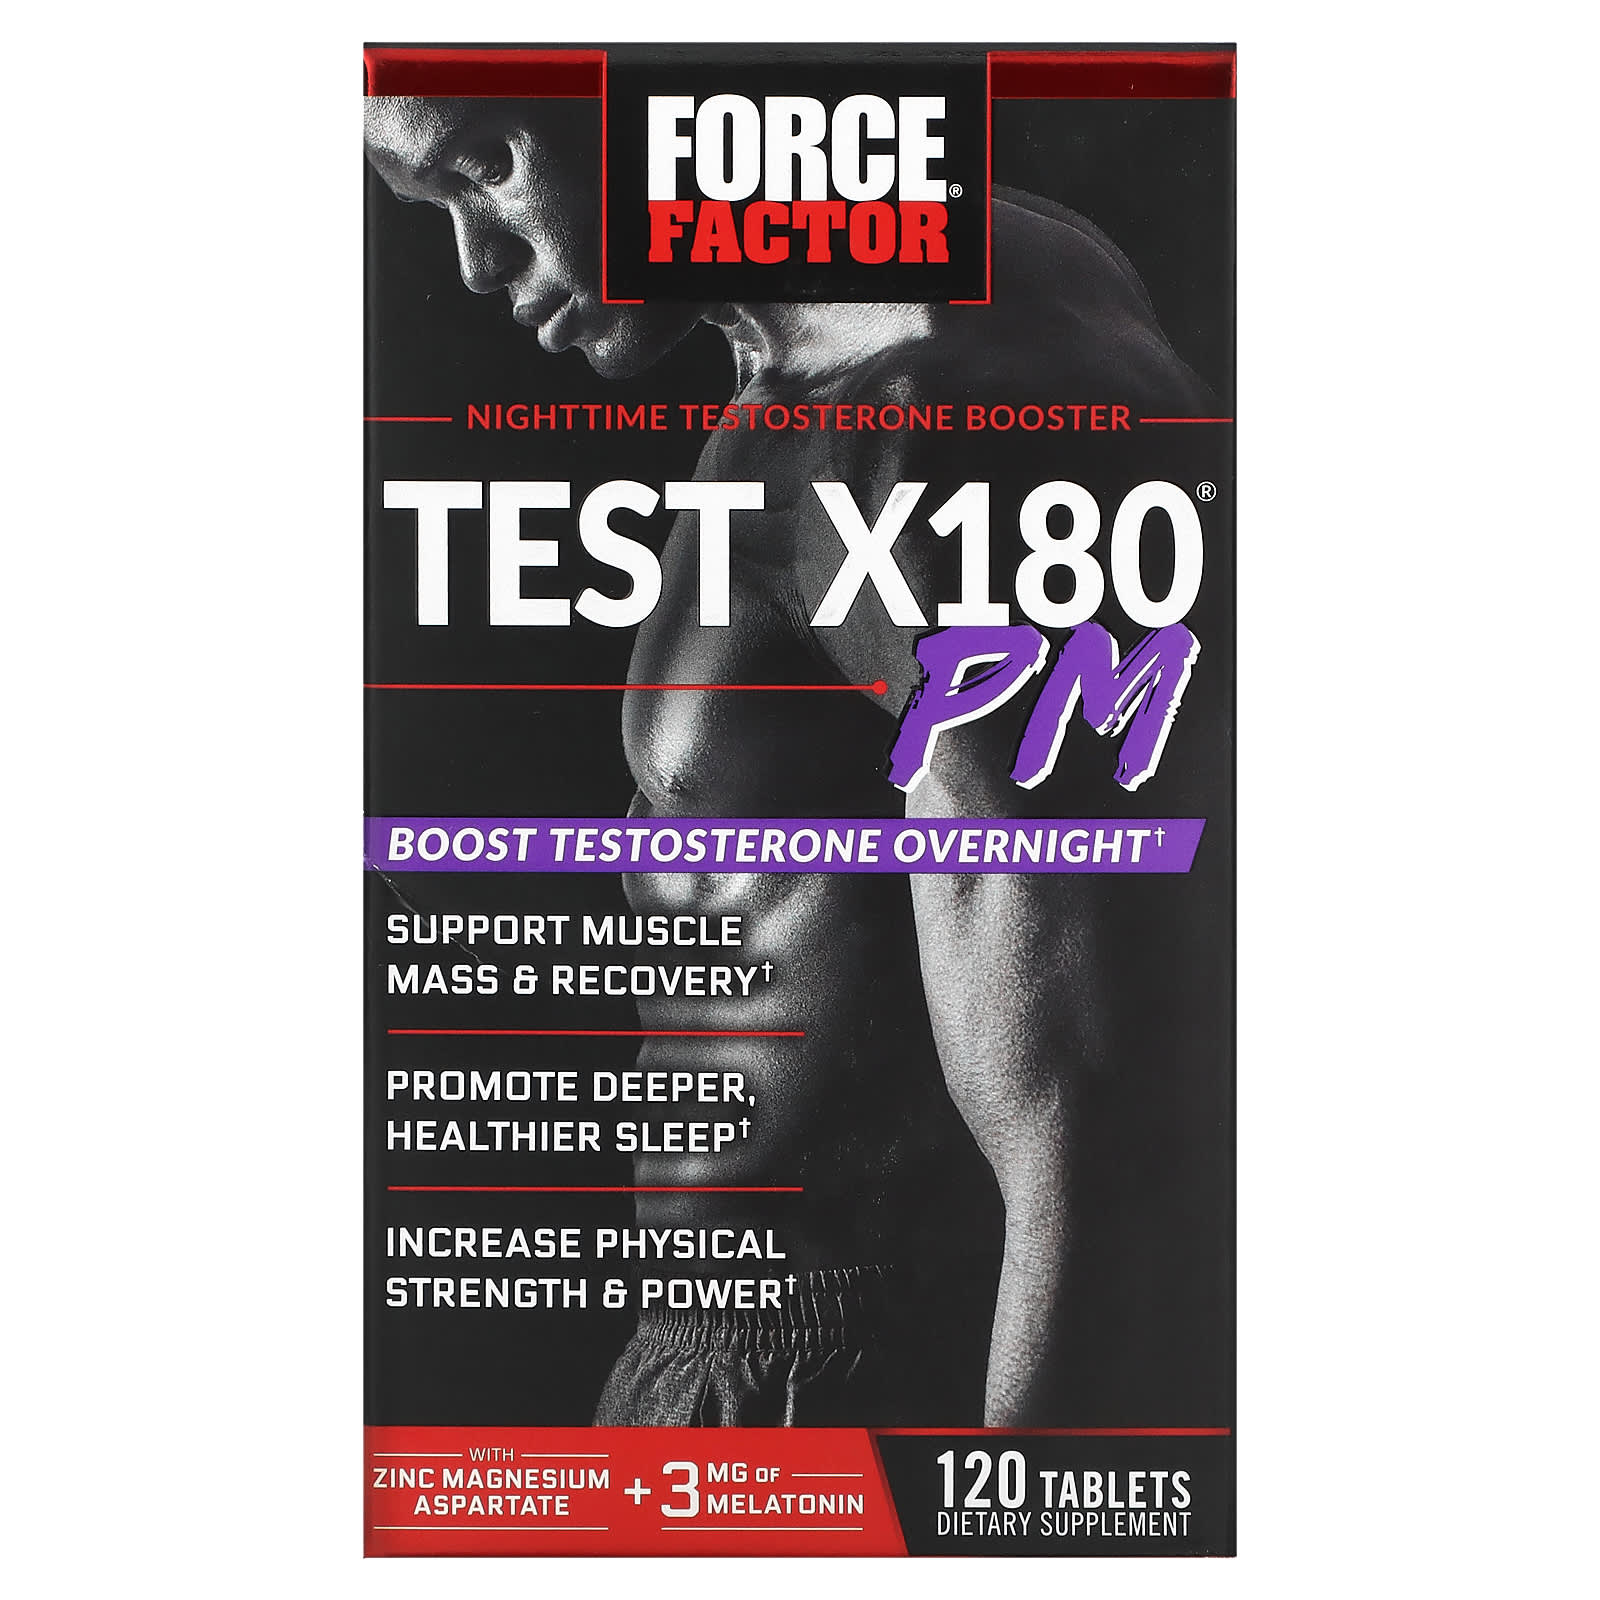 Ночной Бустер Тестостерона Force Factor, 120 таблеток элитный бустер тестостерона force factor 45 таблеток